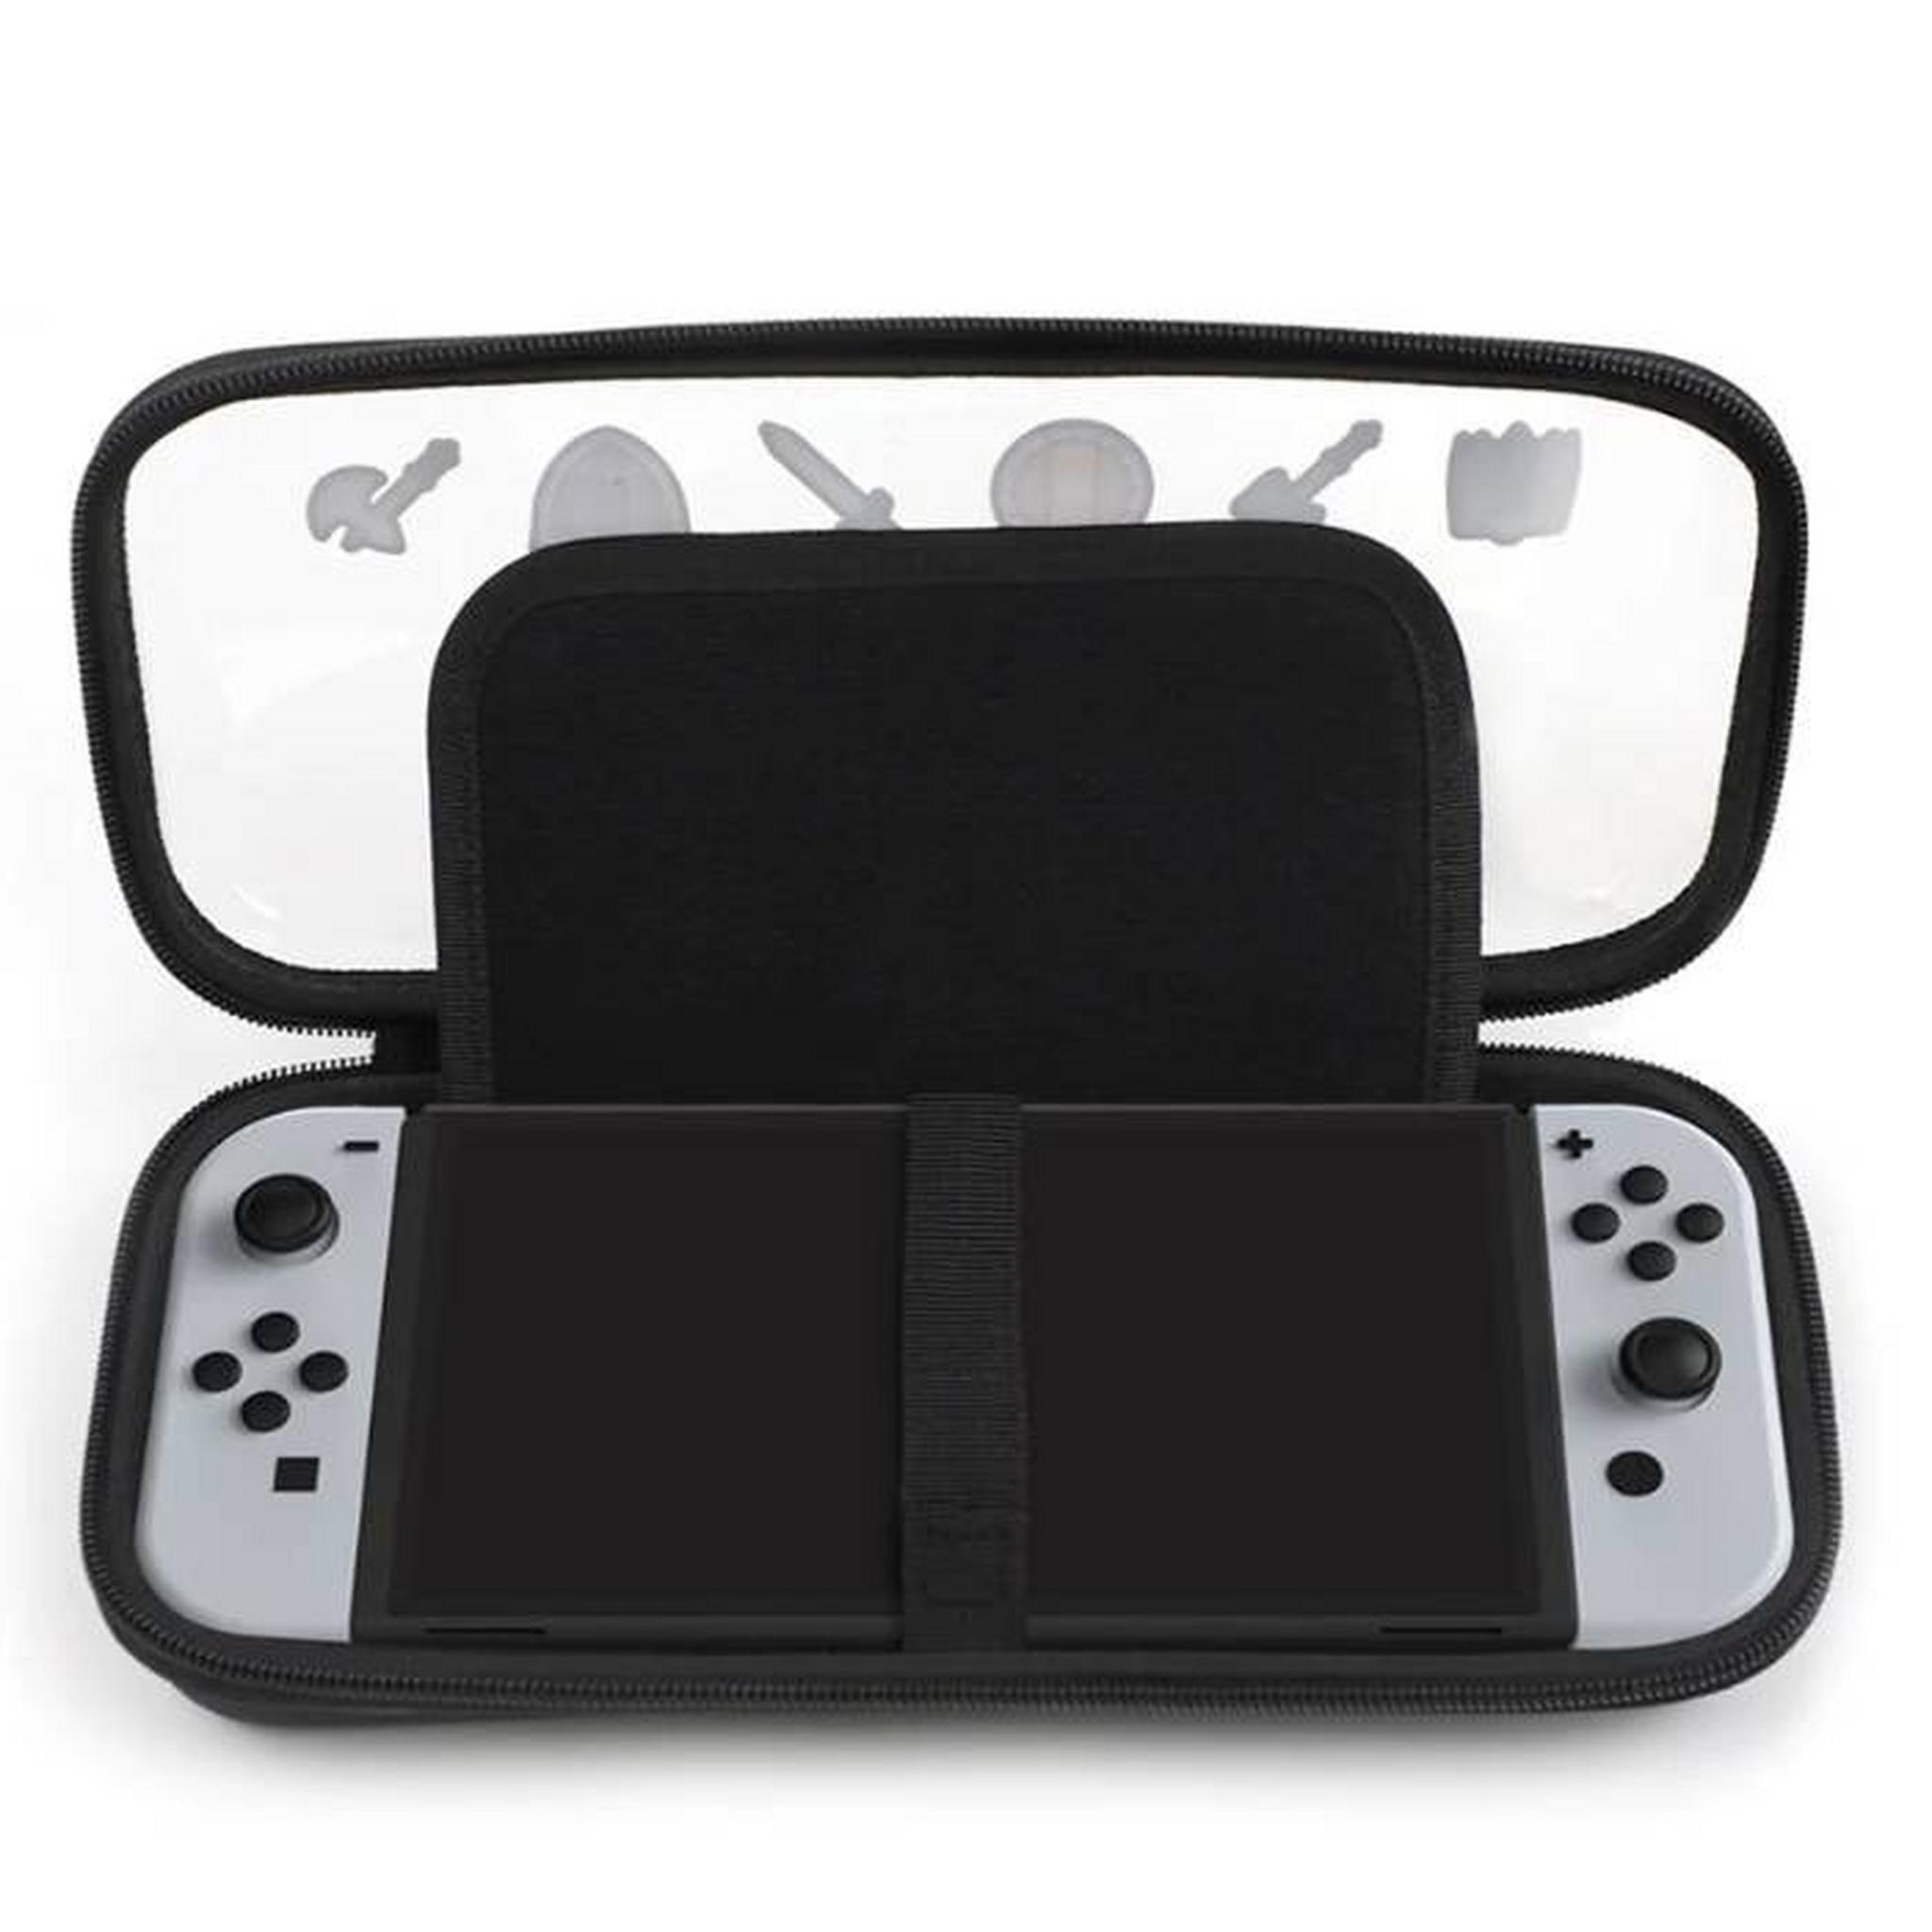 Dobe Nintendo Switch OLED Portable Case, TNS-1157 – Black